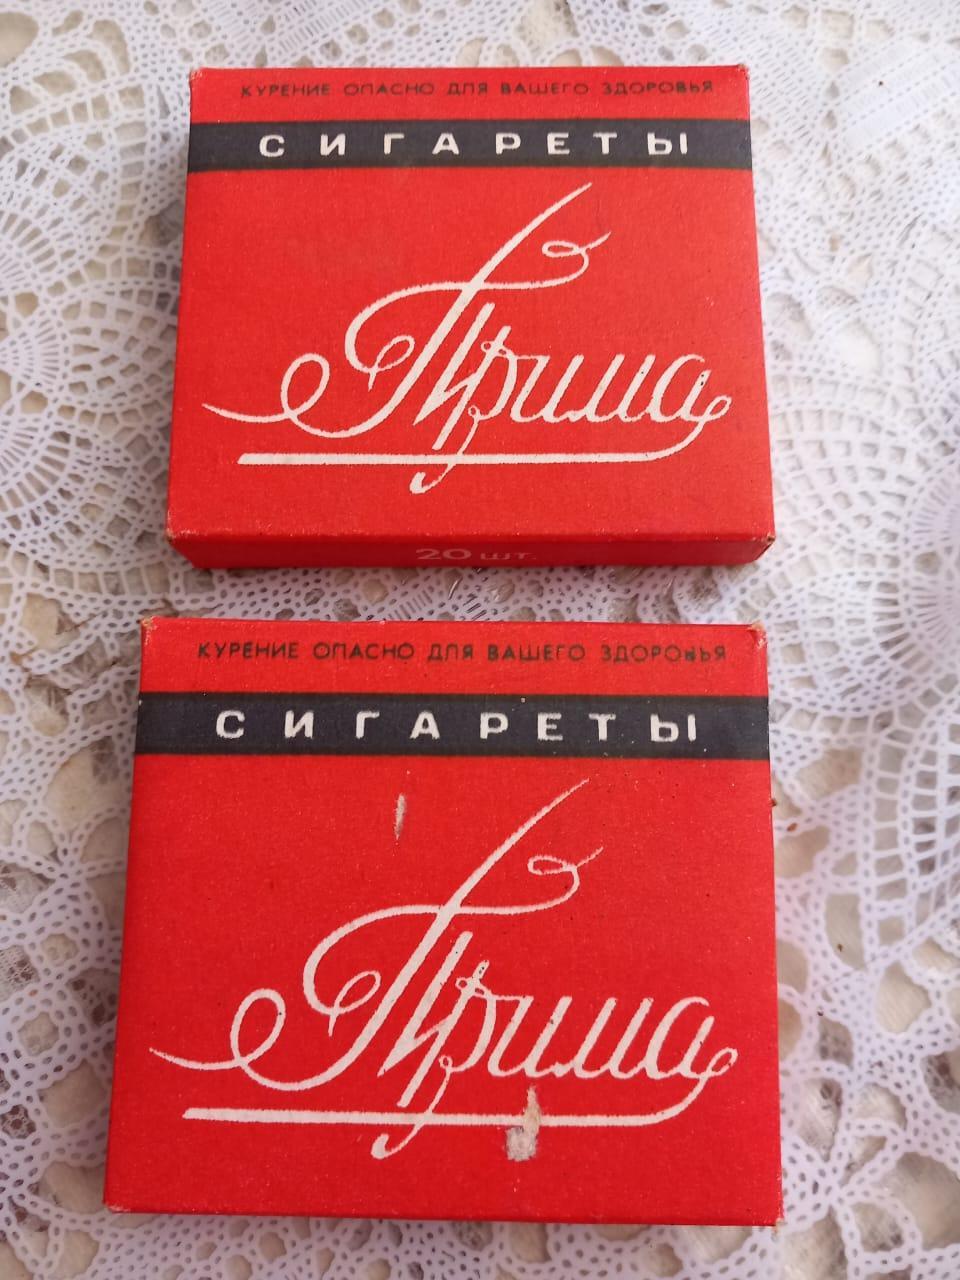 Коробка сигаретных пачек Прима Курск СССР начало 1990-х годов целая винтаж ретро